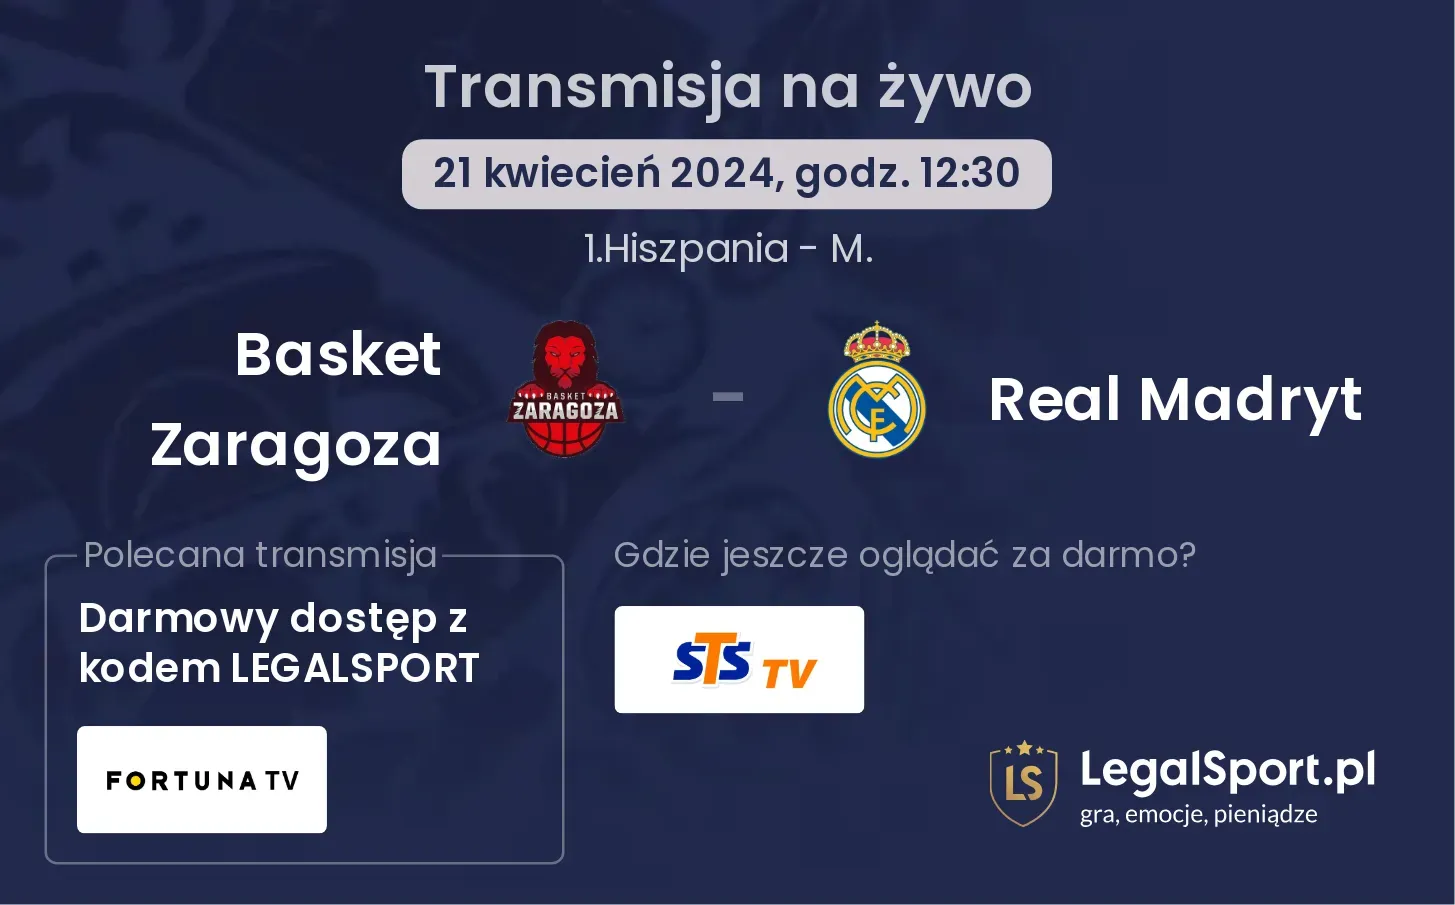 Basket Zaragoza - Real Madryt transmisja na żywo